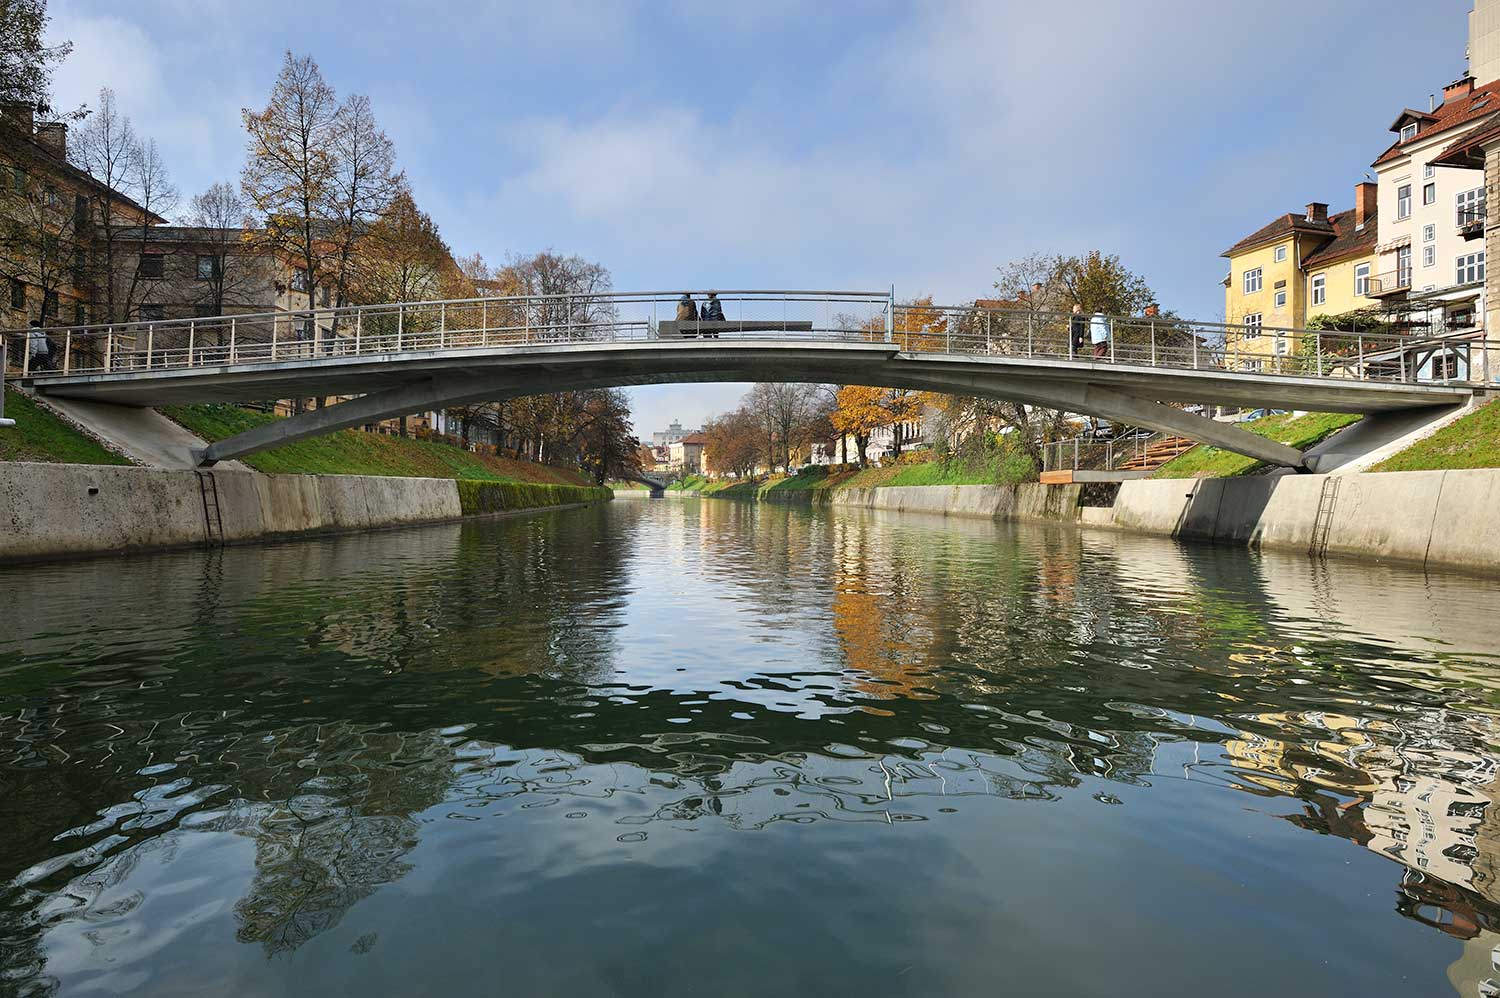 Žitni most (Grain bridge) Donation to the City of Ljubljana